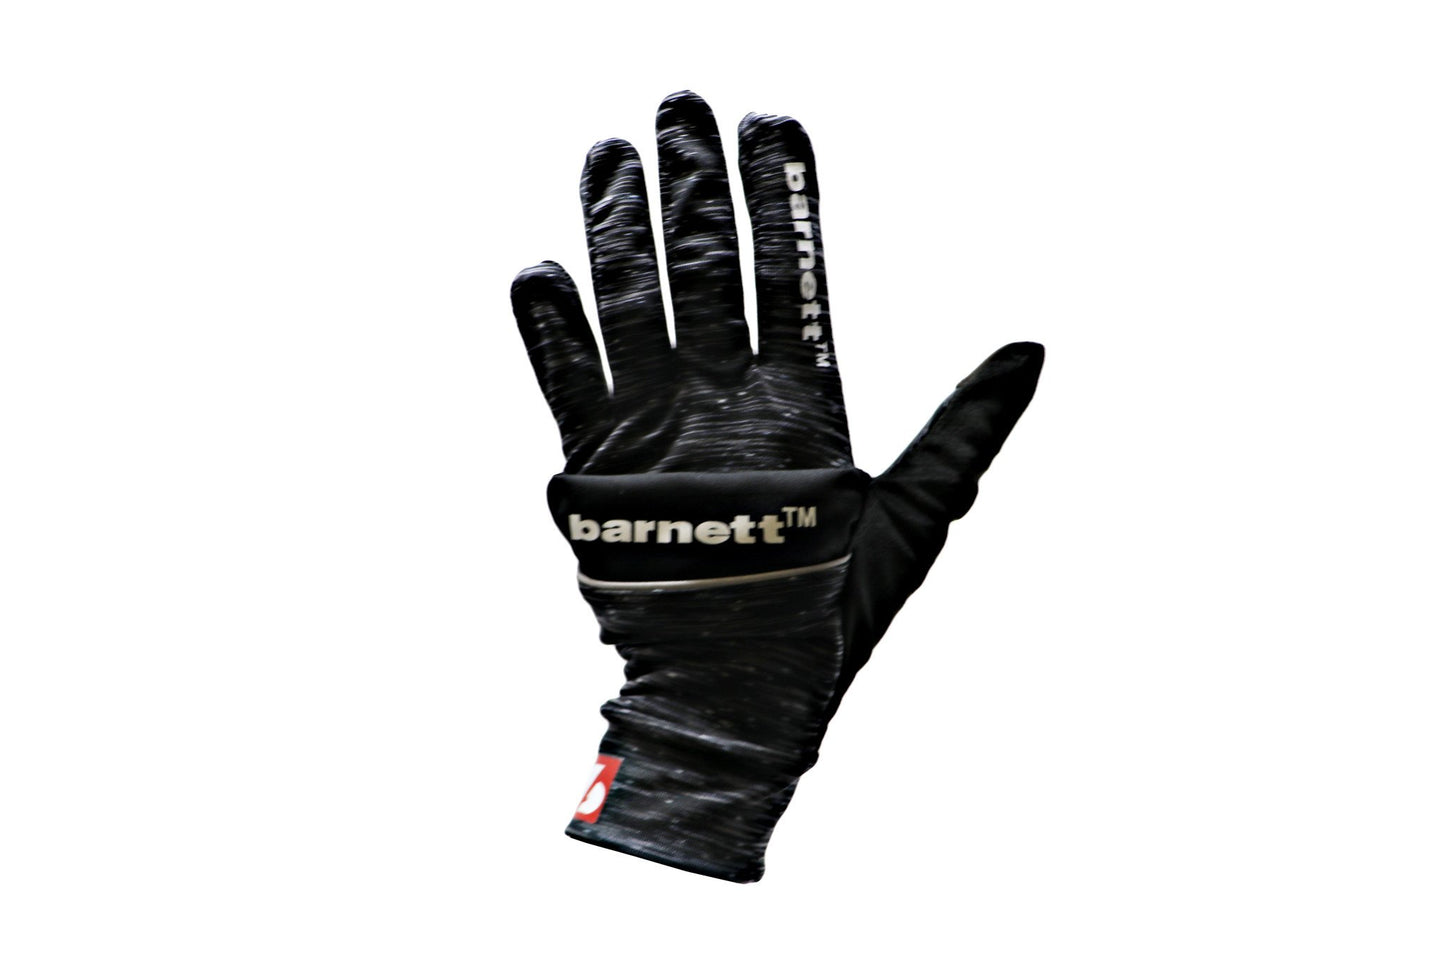 NBG-13 winter ski glove -5 ° to -10 °